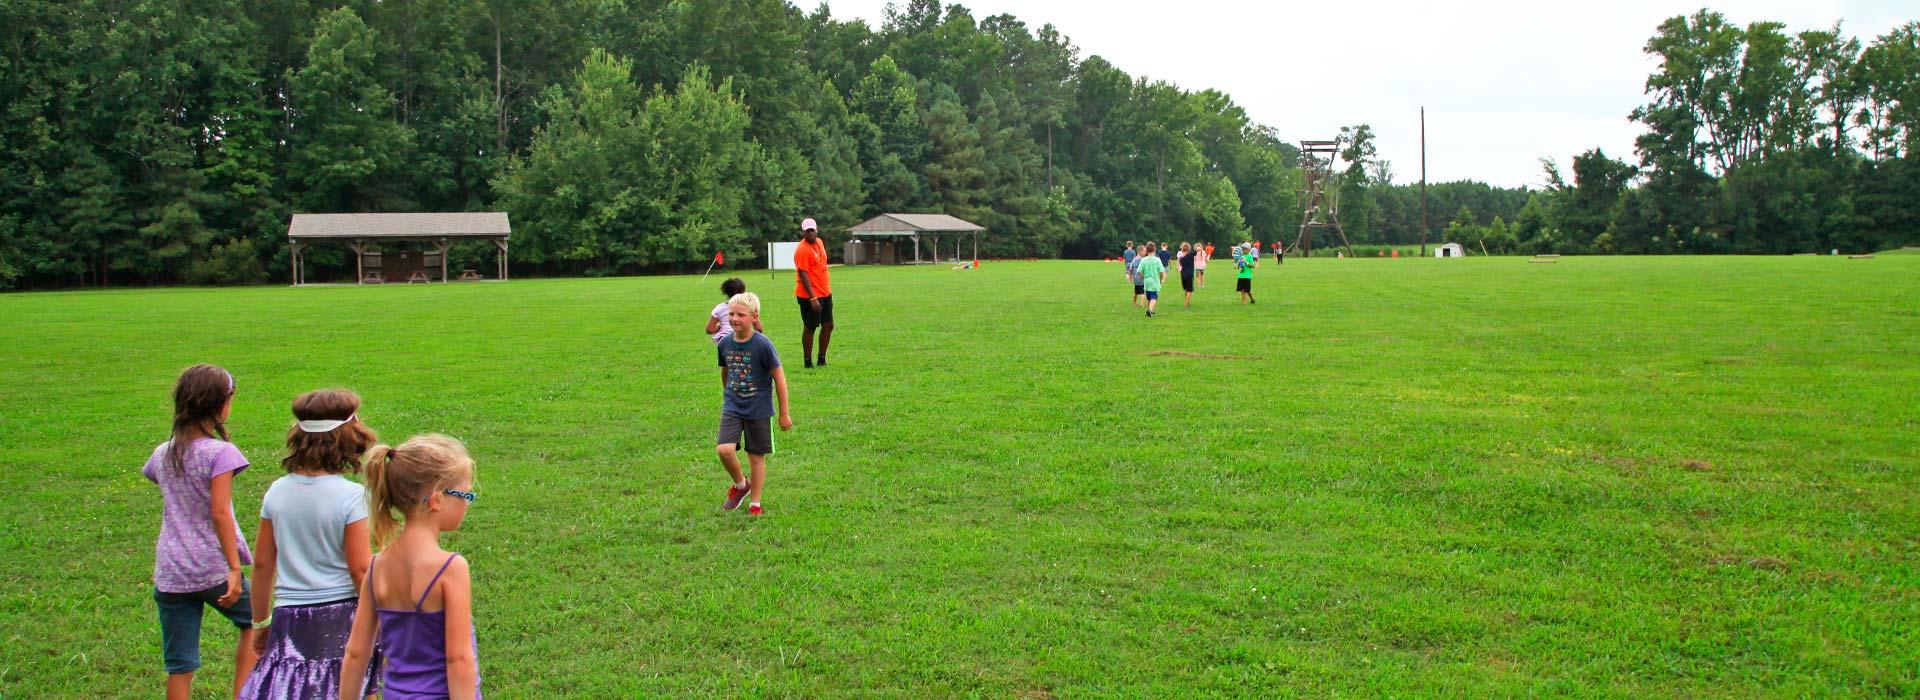 Campers walking across sports field at YMCA Camp Arrowhead in Suffolk, Virginia